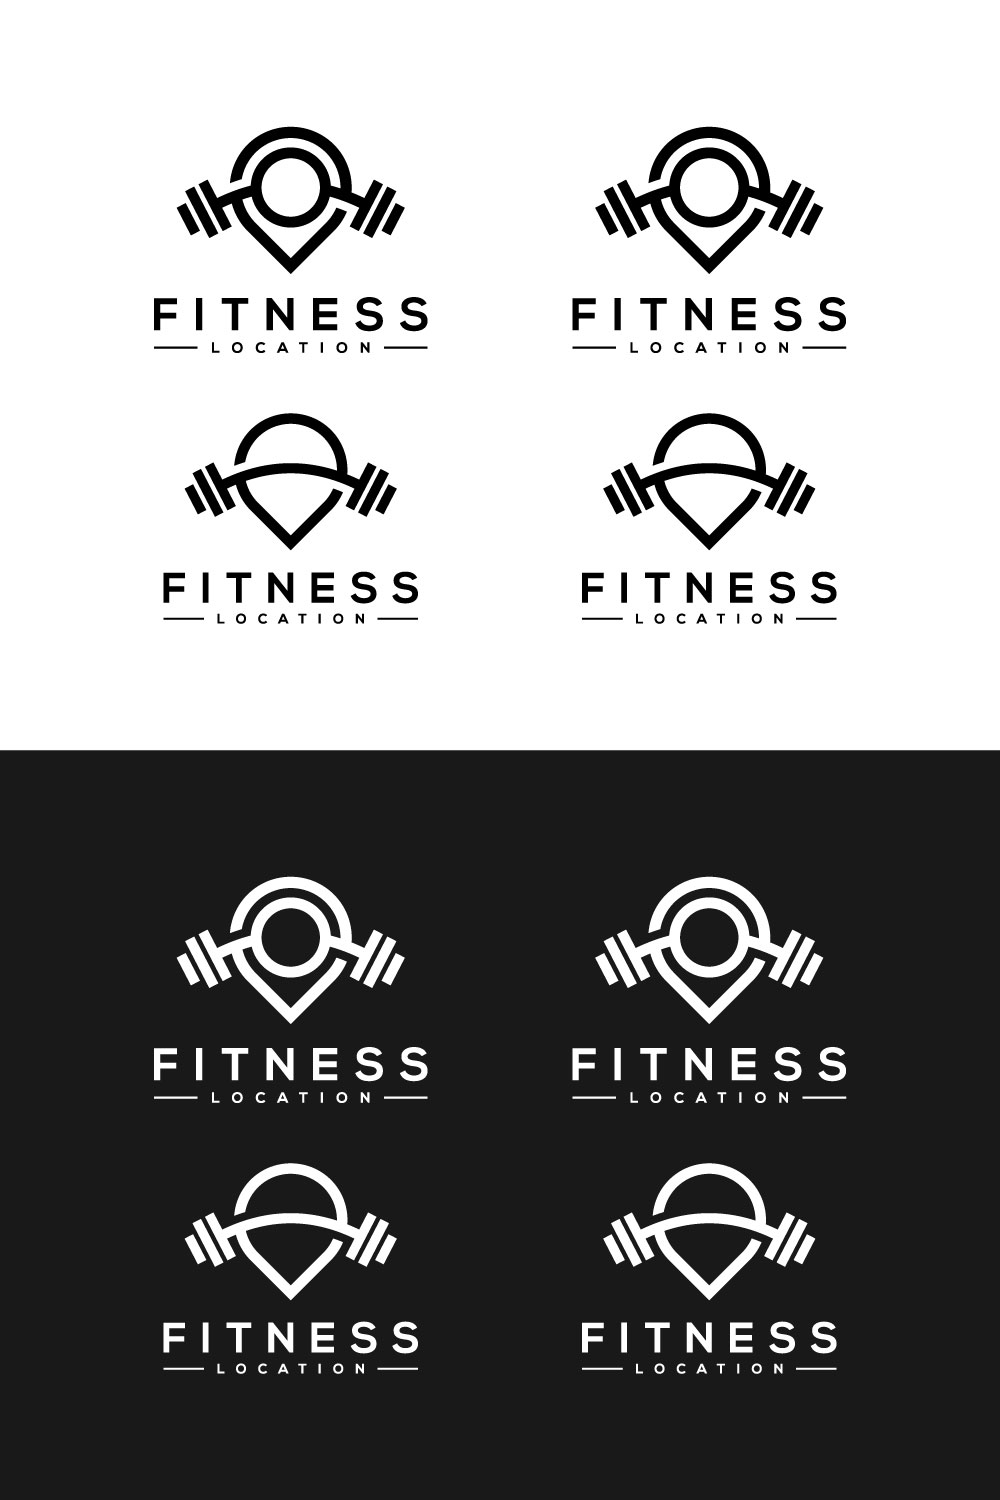 2 Fitness Location Logo Vector Design pinterest.